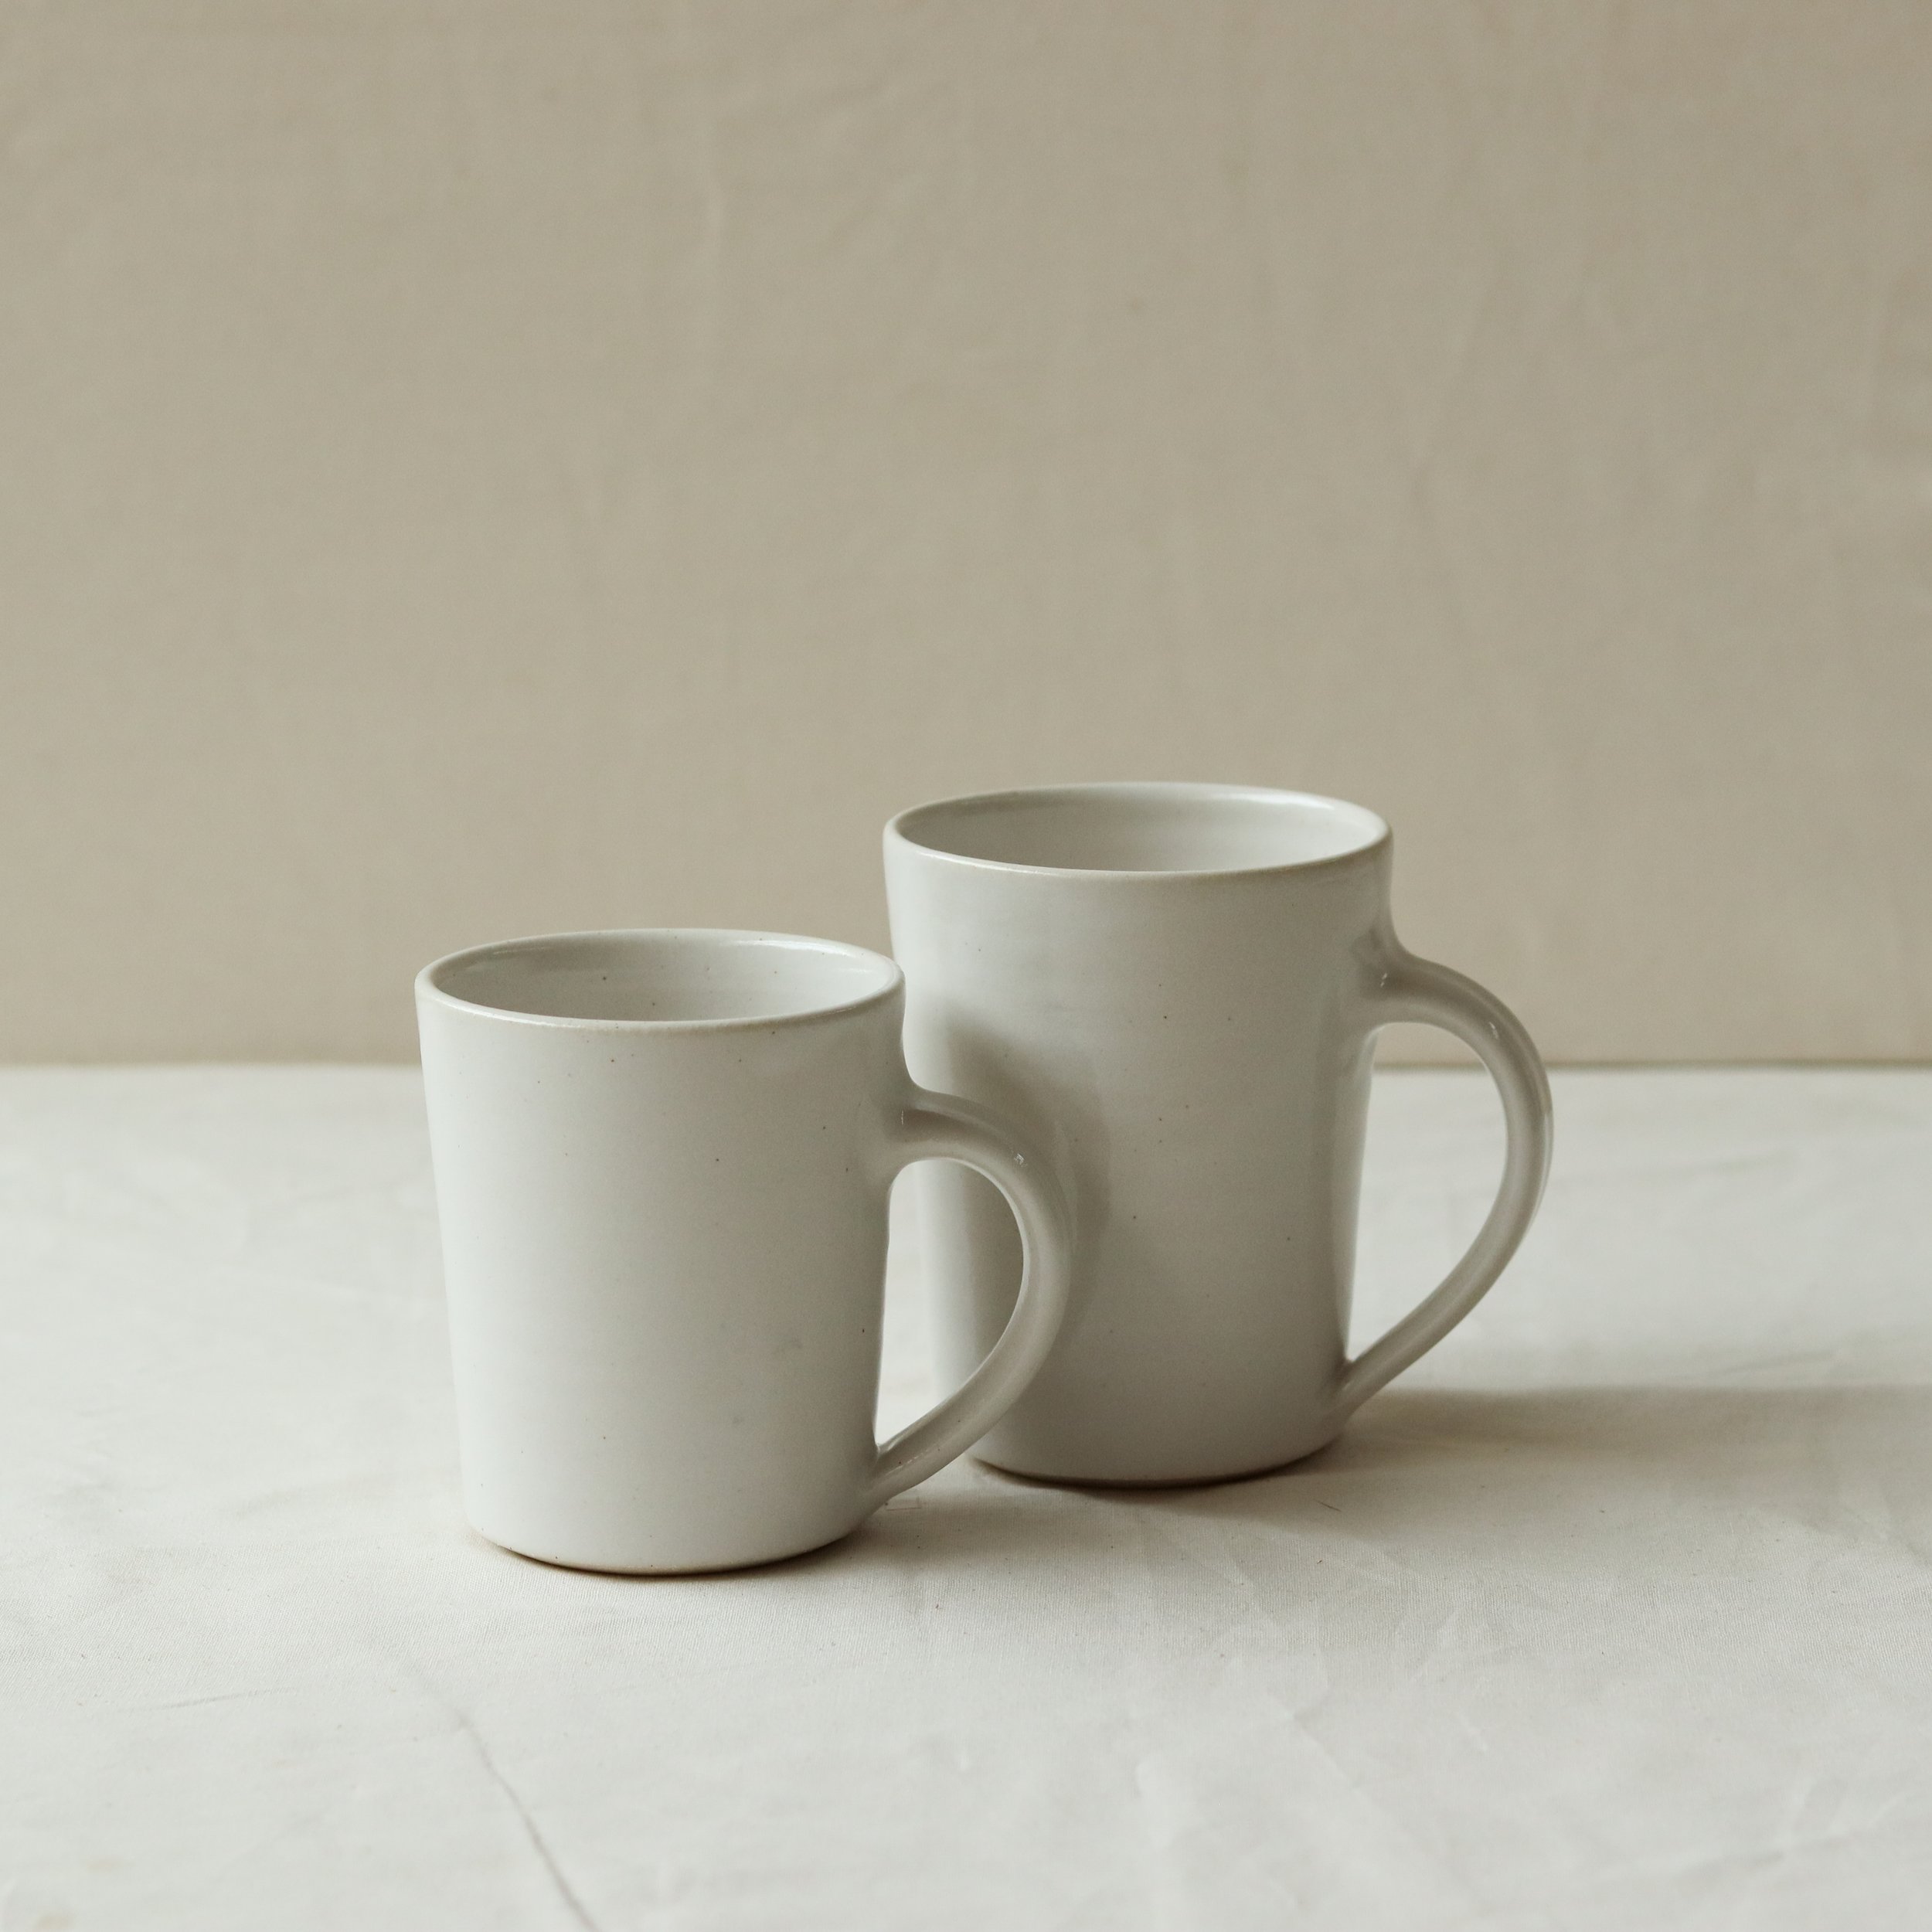 350ml Tapered Mug in Speckled White, Pale Stoneware -1.jpg